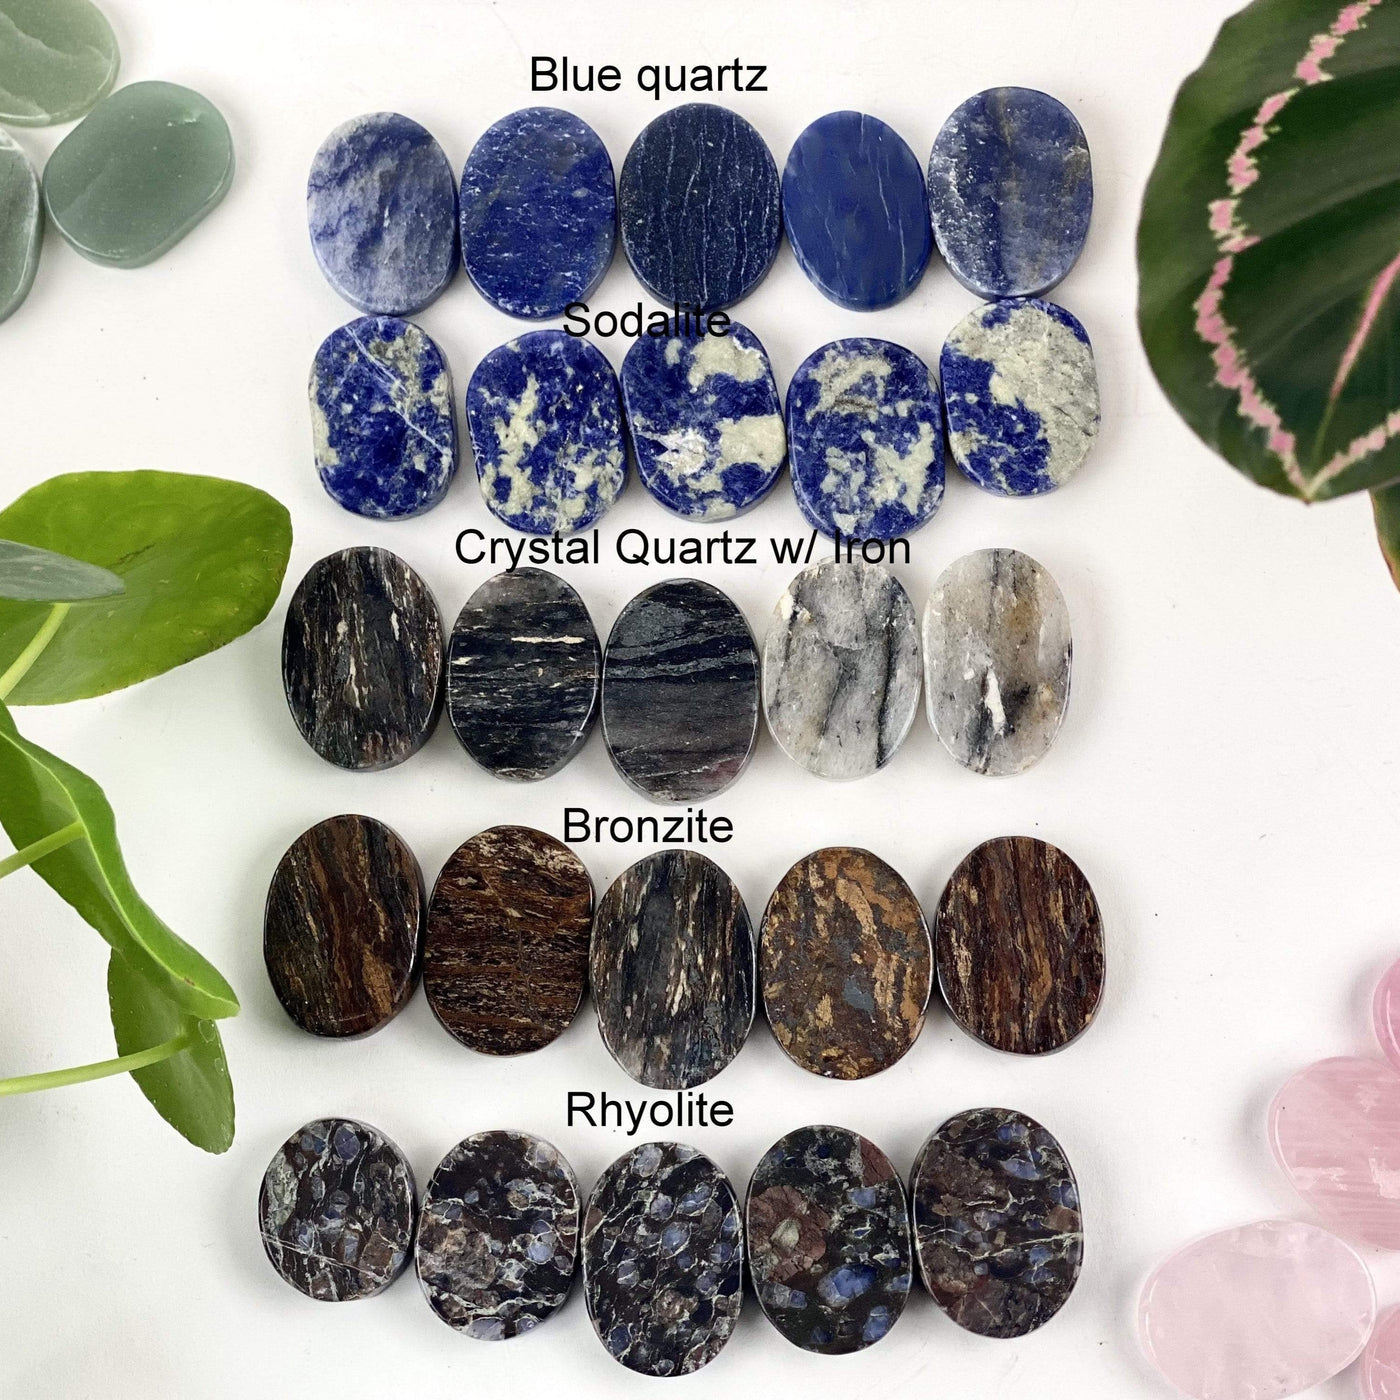 Gemstone Worry Stones in blue quartz, sodalite, crystal quartz with iron, bronzite, rhyolite